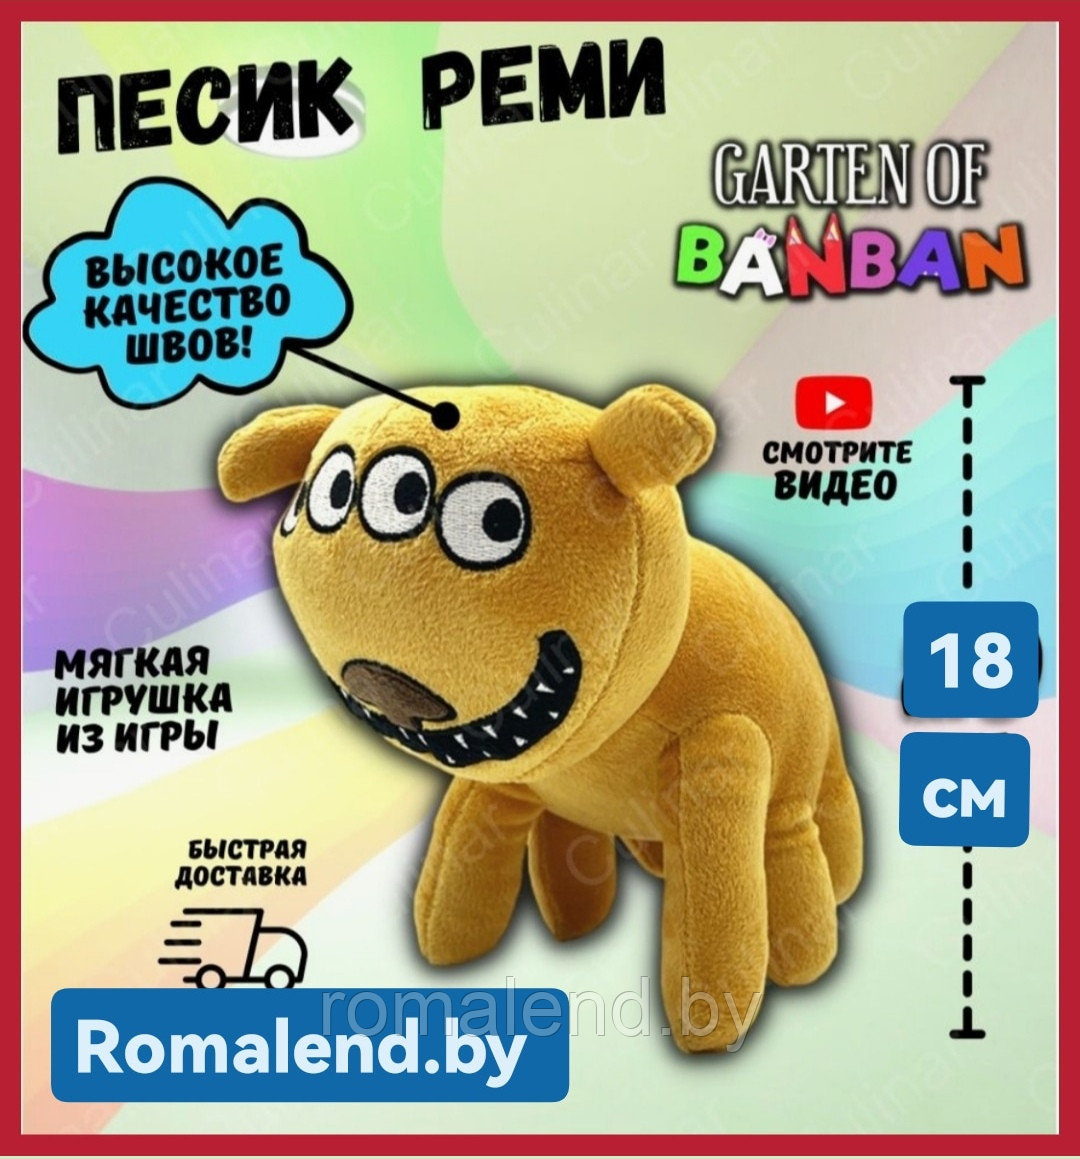 Мягкая игрушка REMY реми собака Гартен оф банбан  размер 18 см.